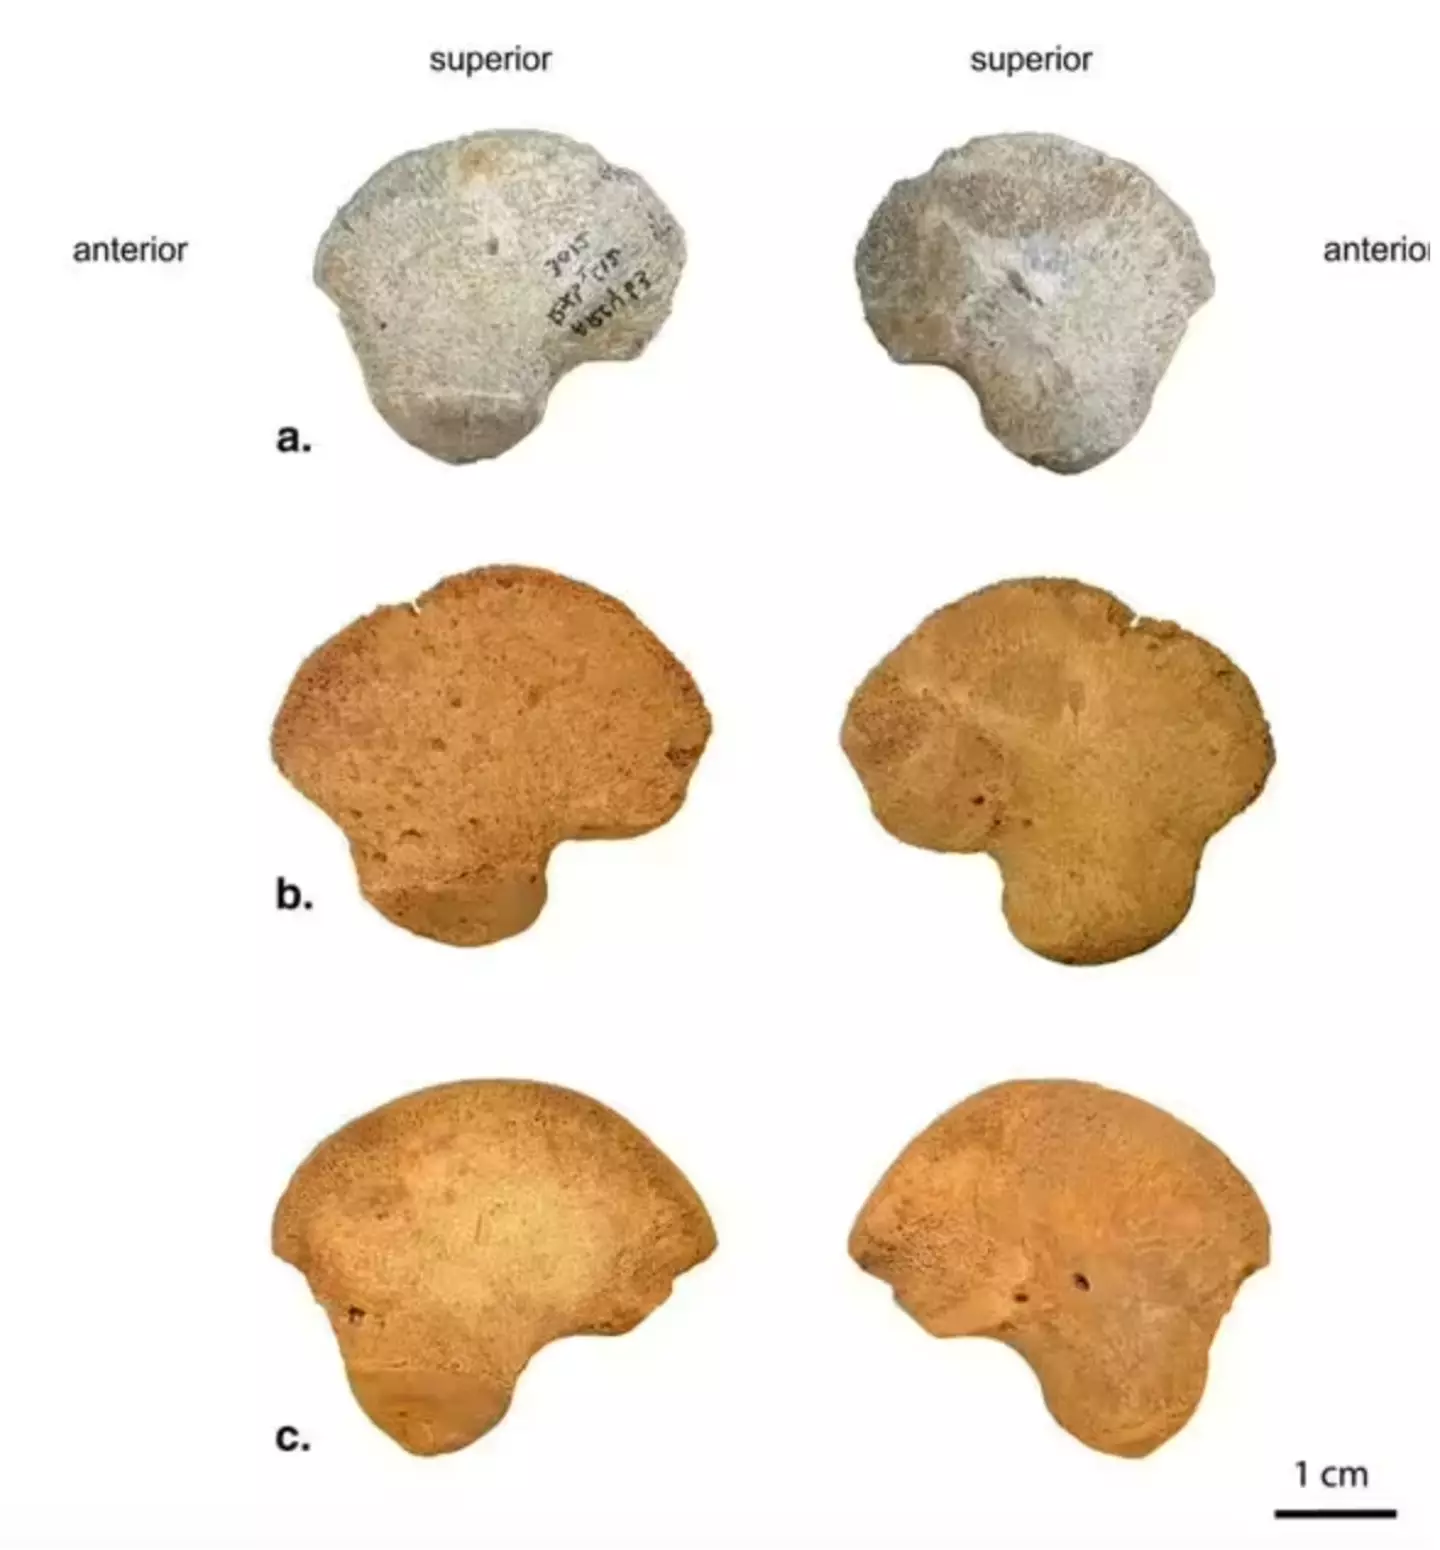 The ilium found (a) is compared to a Neanderthal bone (b) and a recent perinatal bone (c).